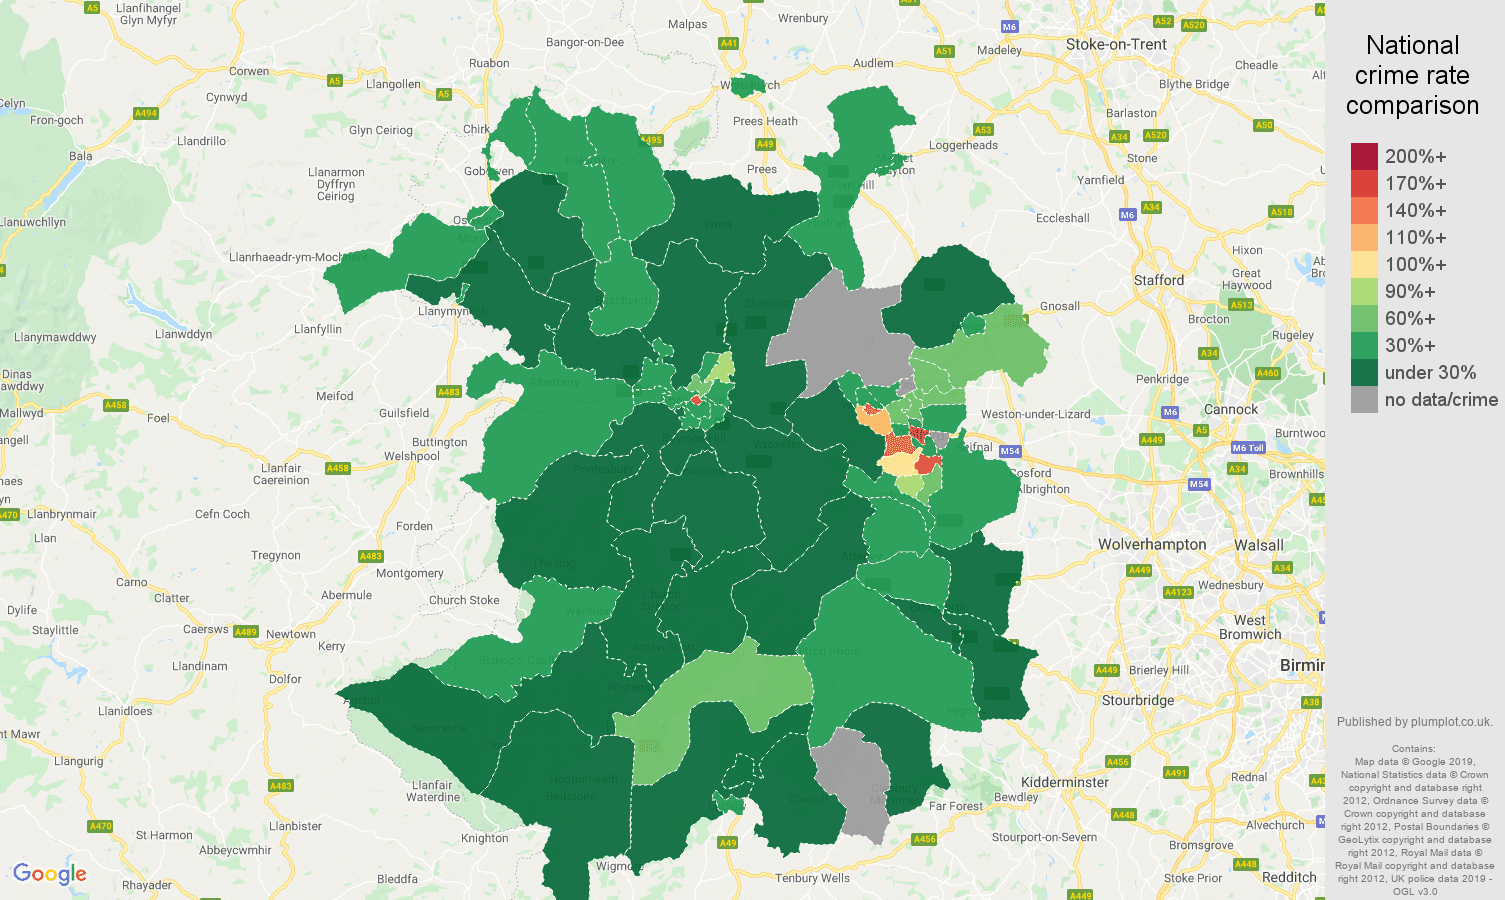 Shropshire public order crime rate comparison map